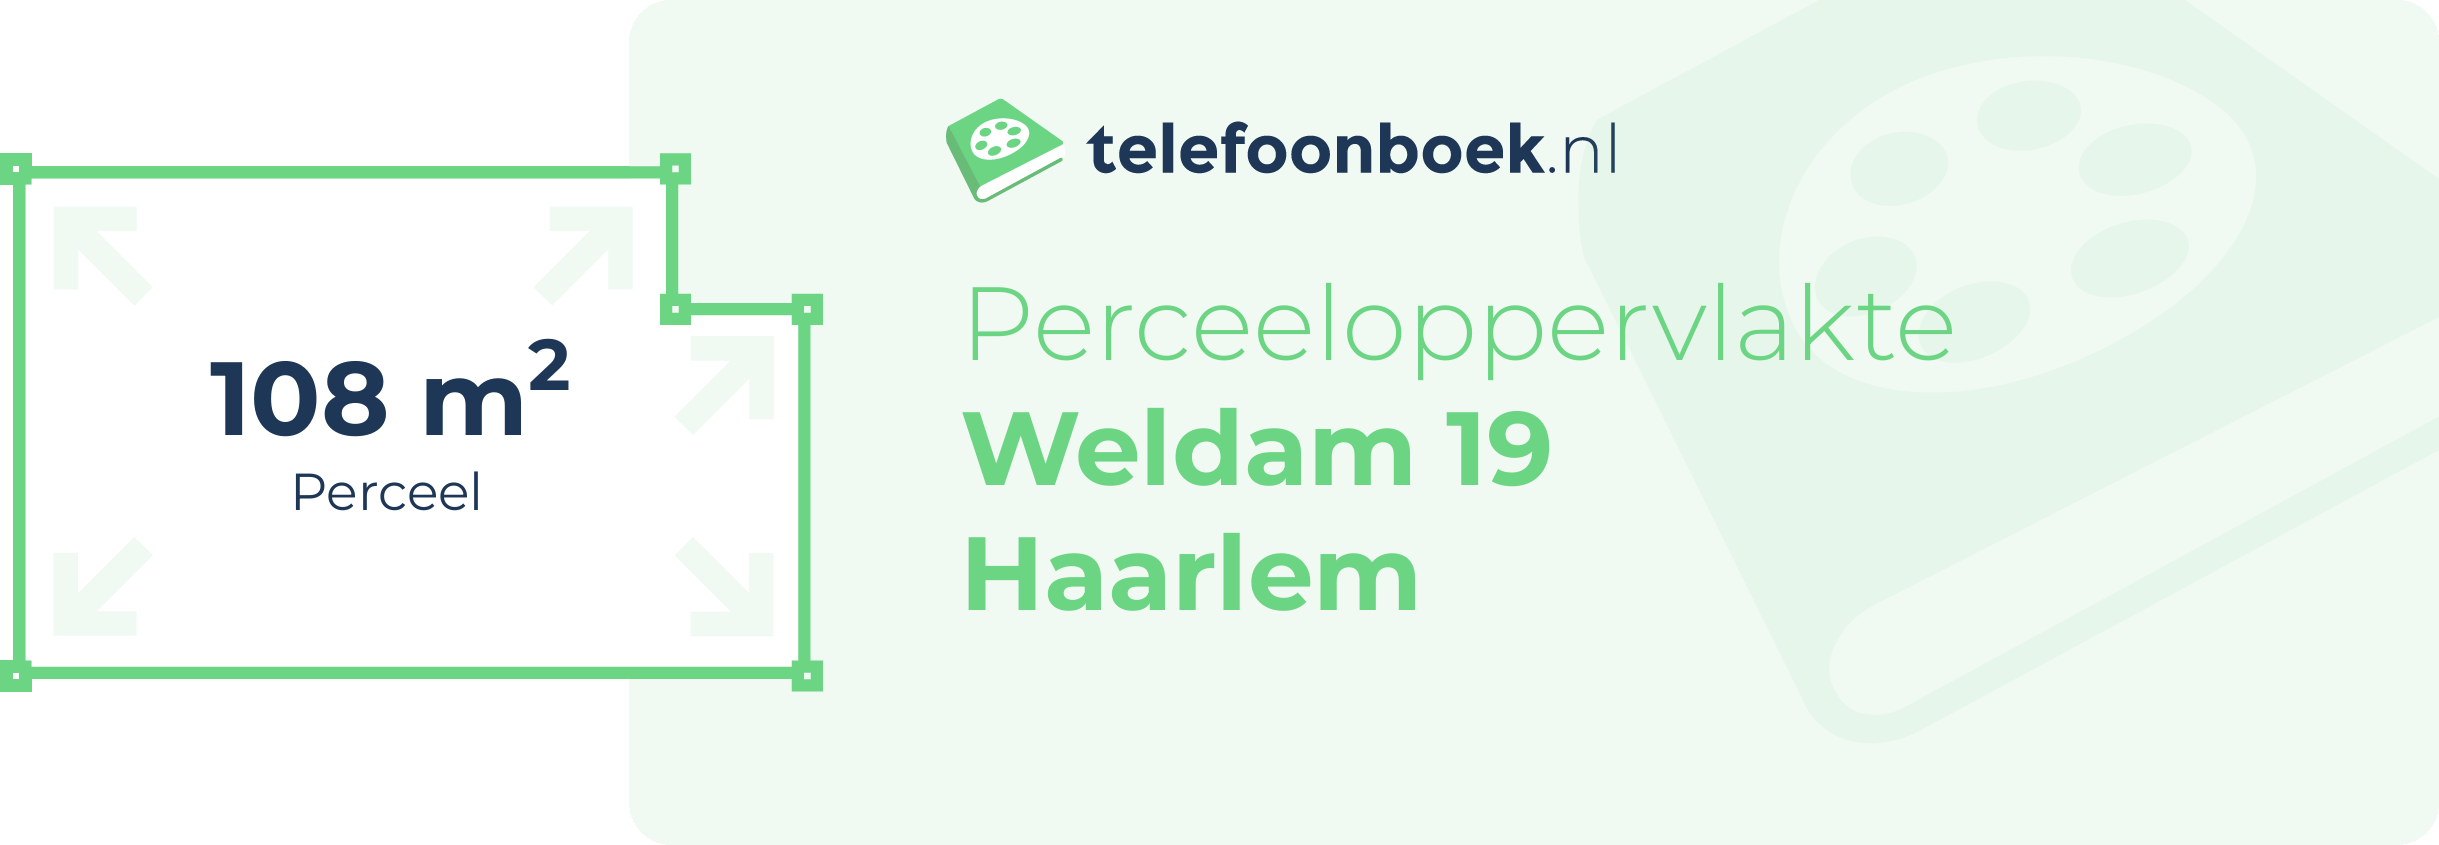 Perceeloppervlakte Weldam 19 Haarlem